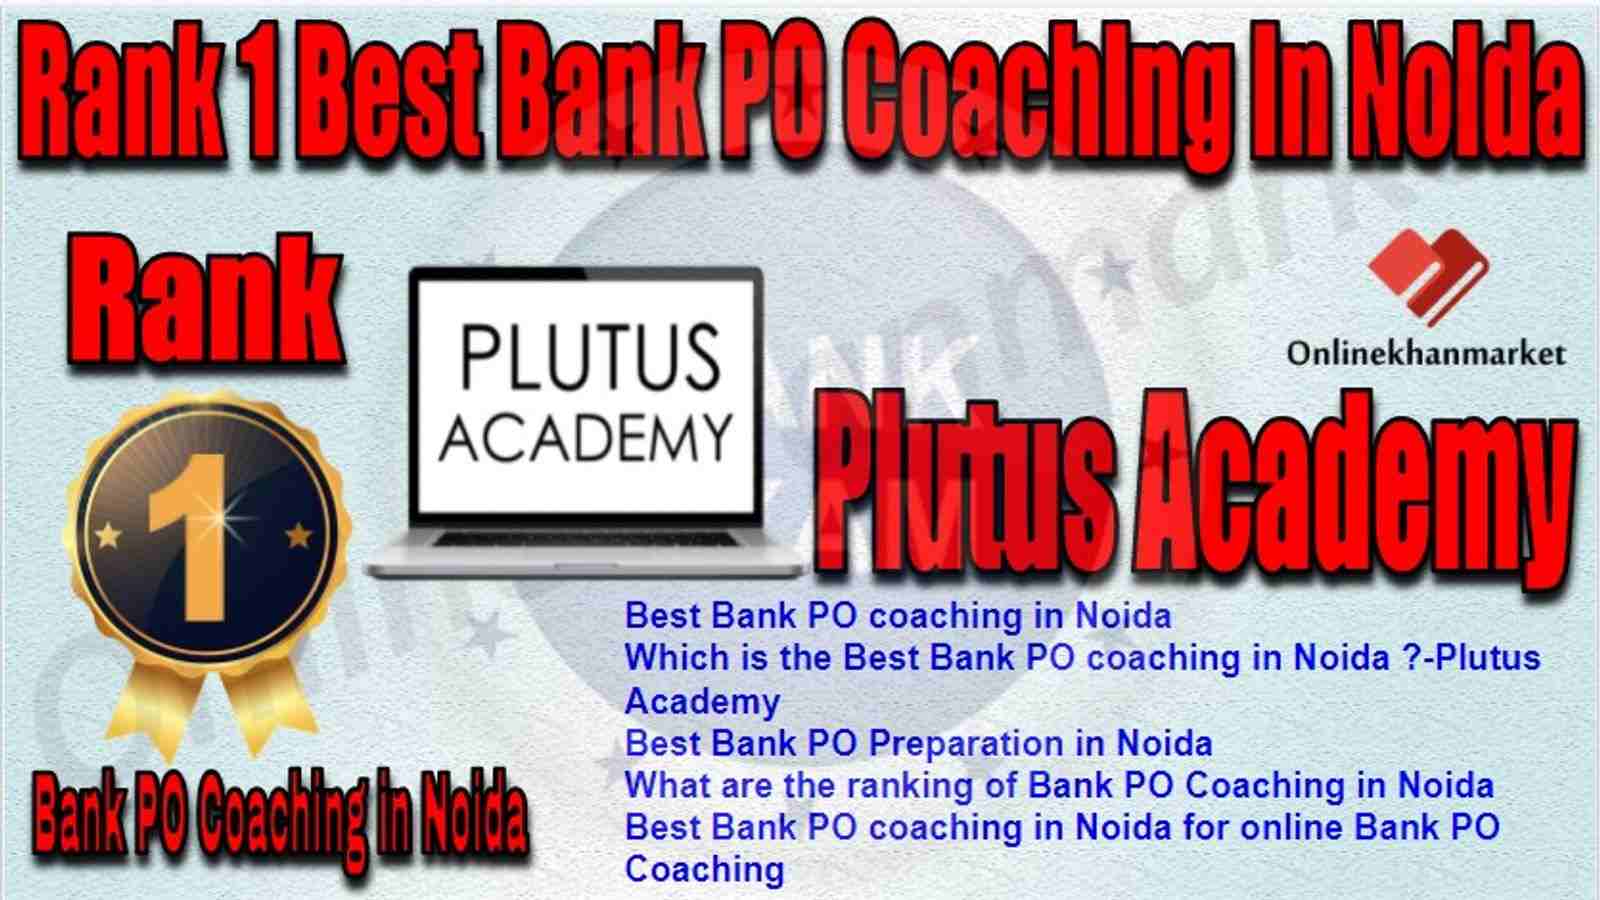 Rank 1 Best Bank PO Coaching in Noida